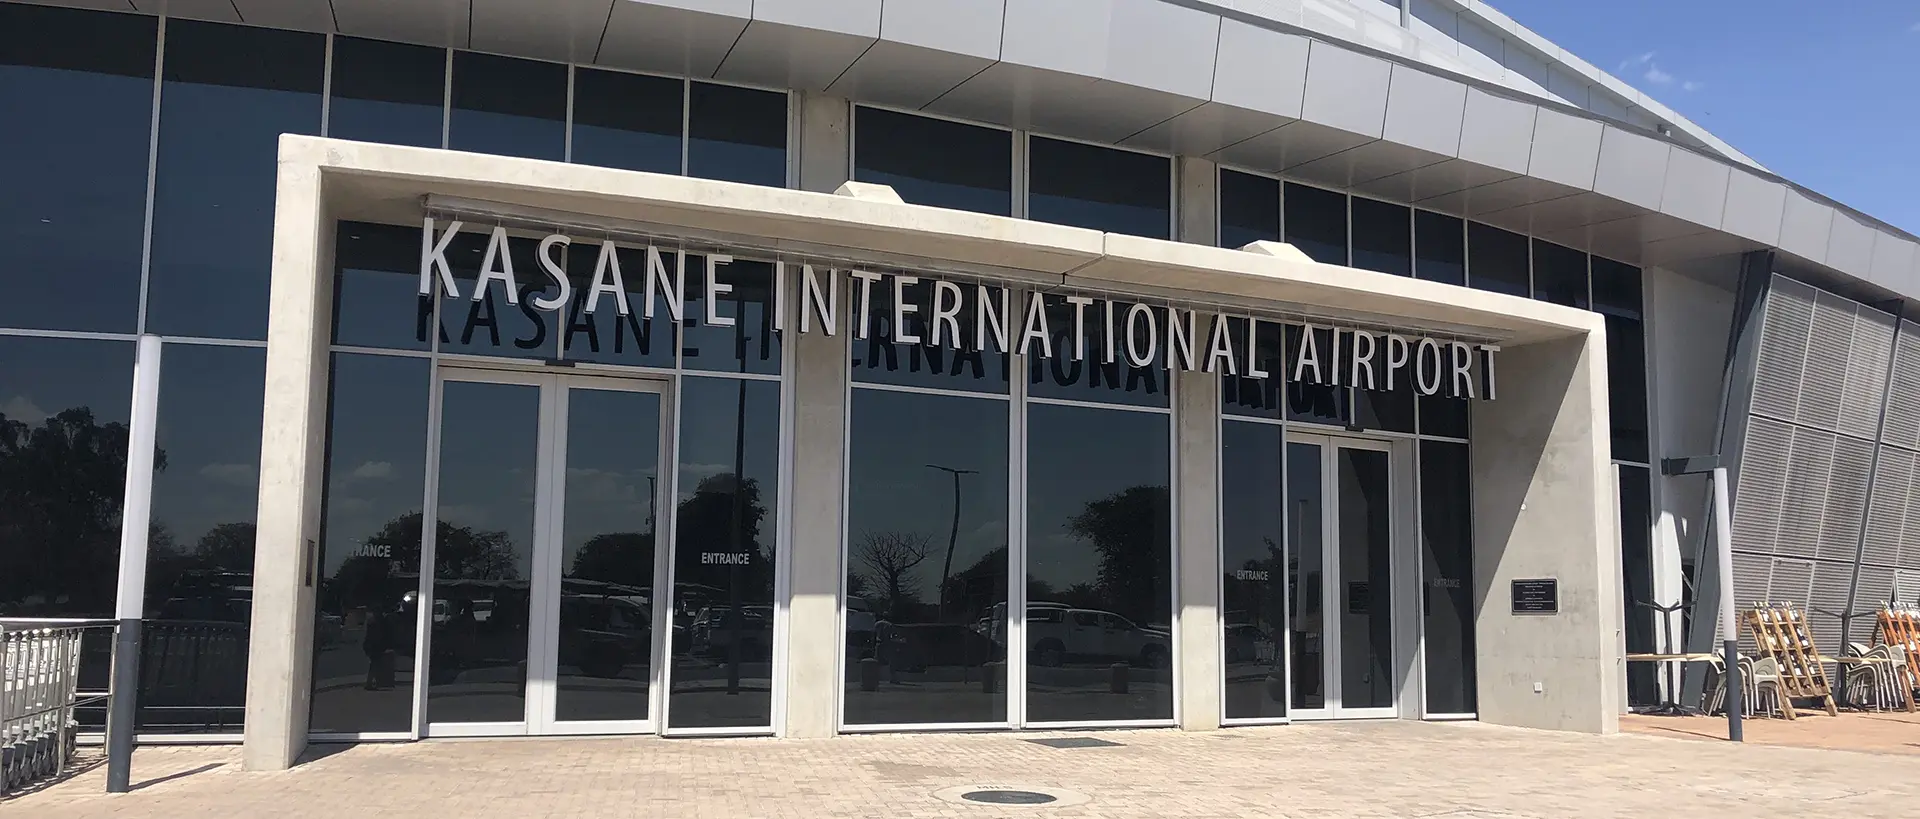 Kasane airport exterior